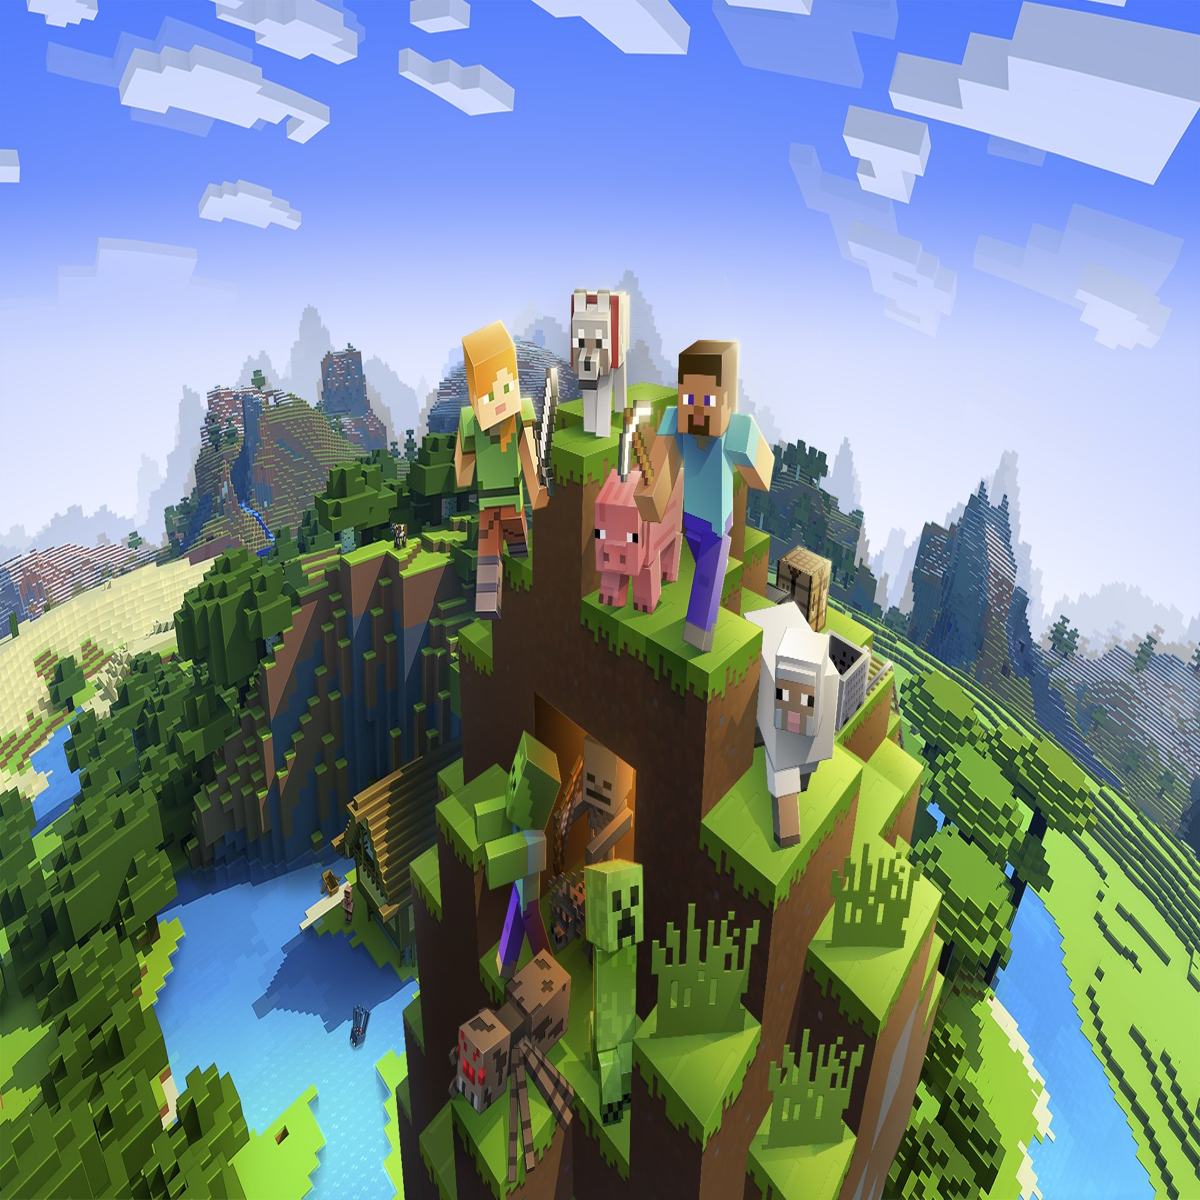 Minecraft PC sells 13 million copies - GameSpot